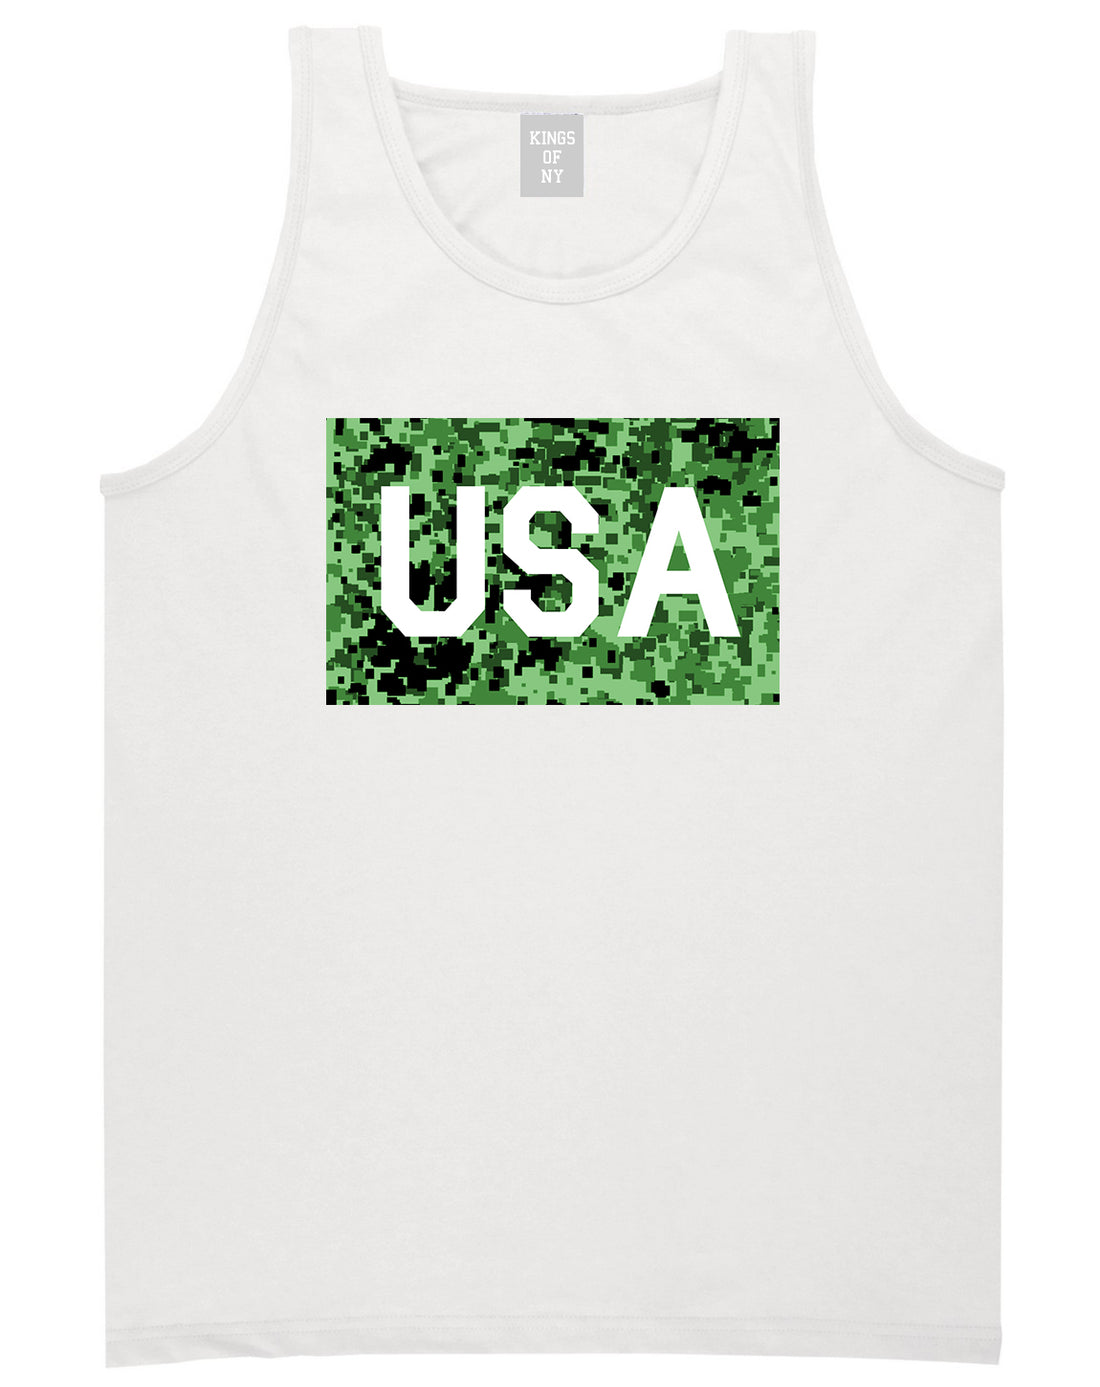 USA_Digital_Camo_Army Mens White Tank Top Shirt by Kings Of NY